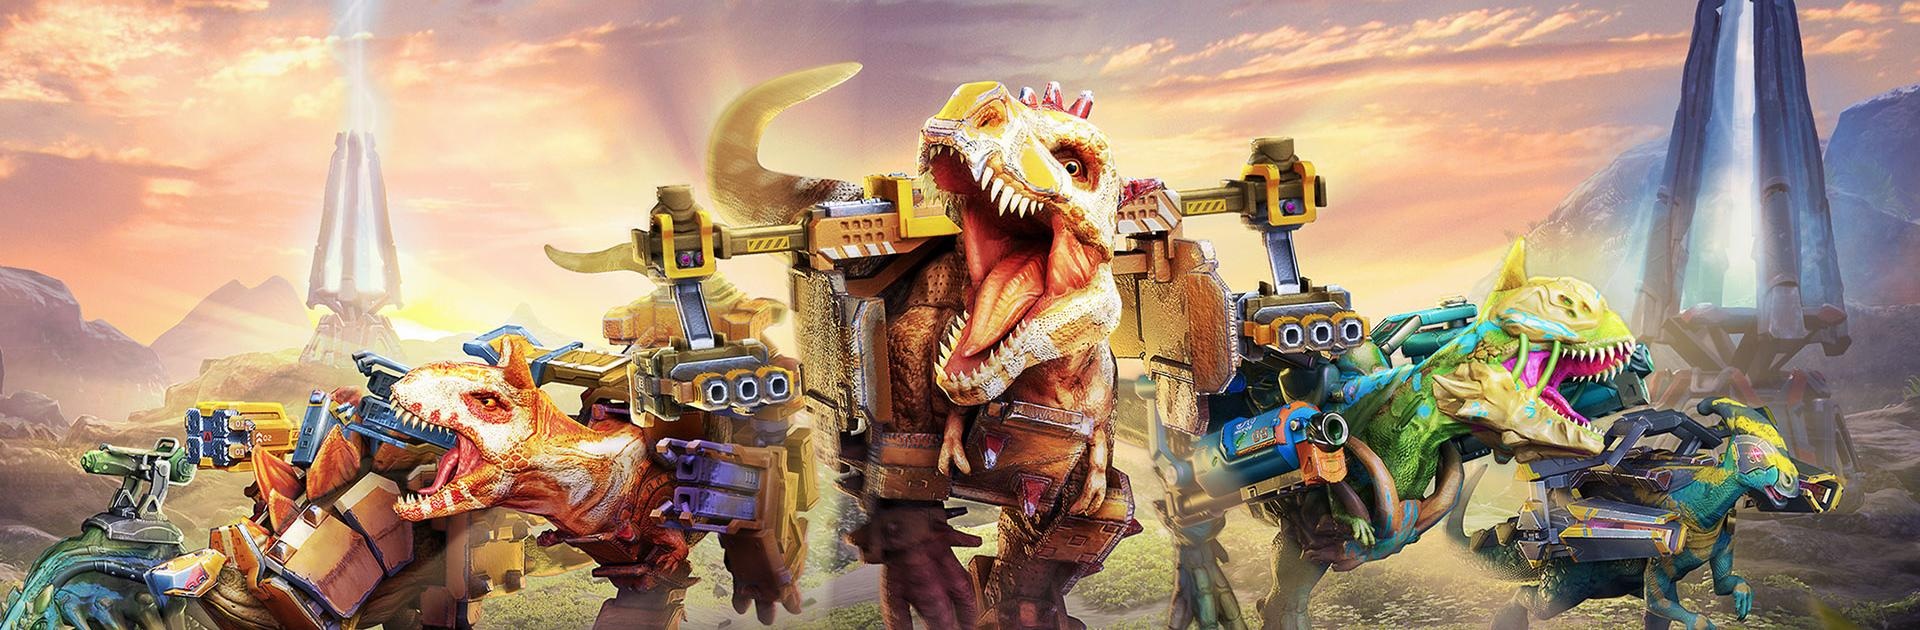 Dino Squad: Dinosaur Shooter